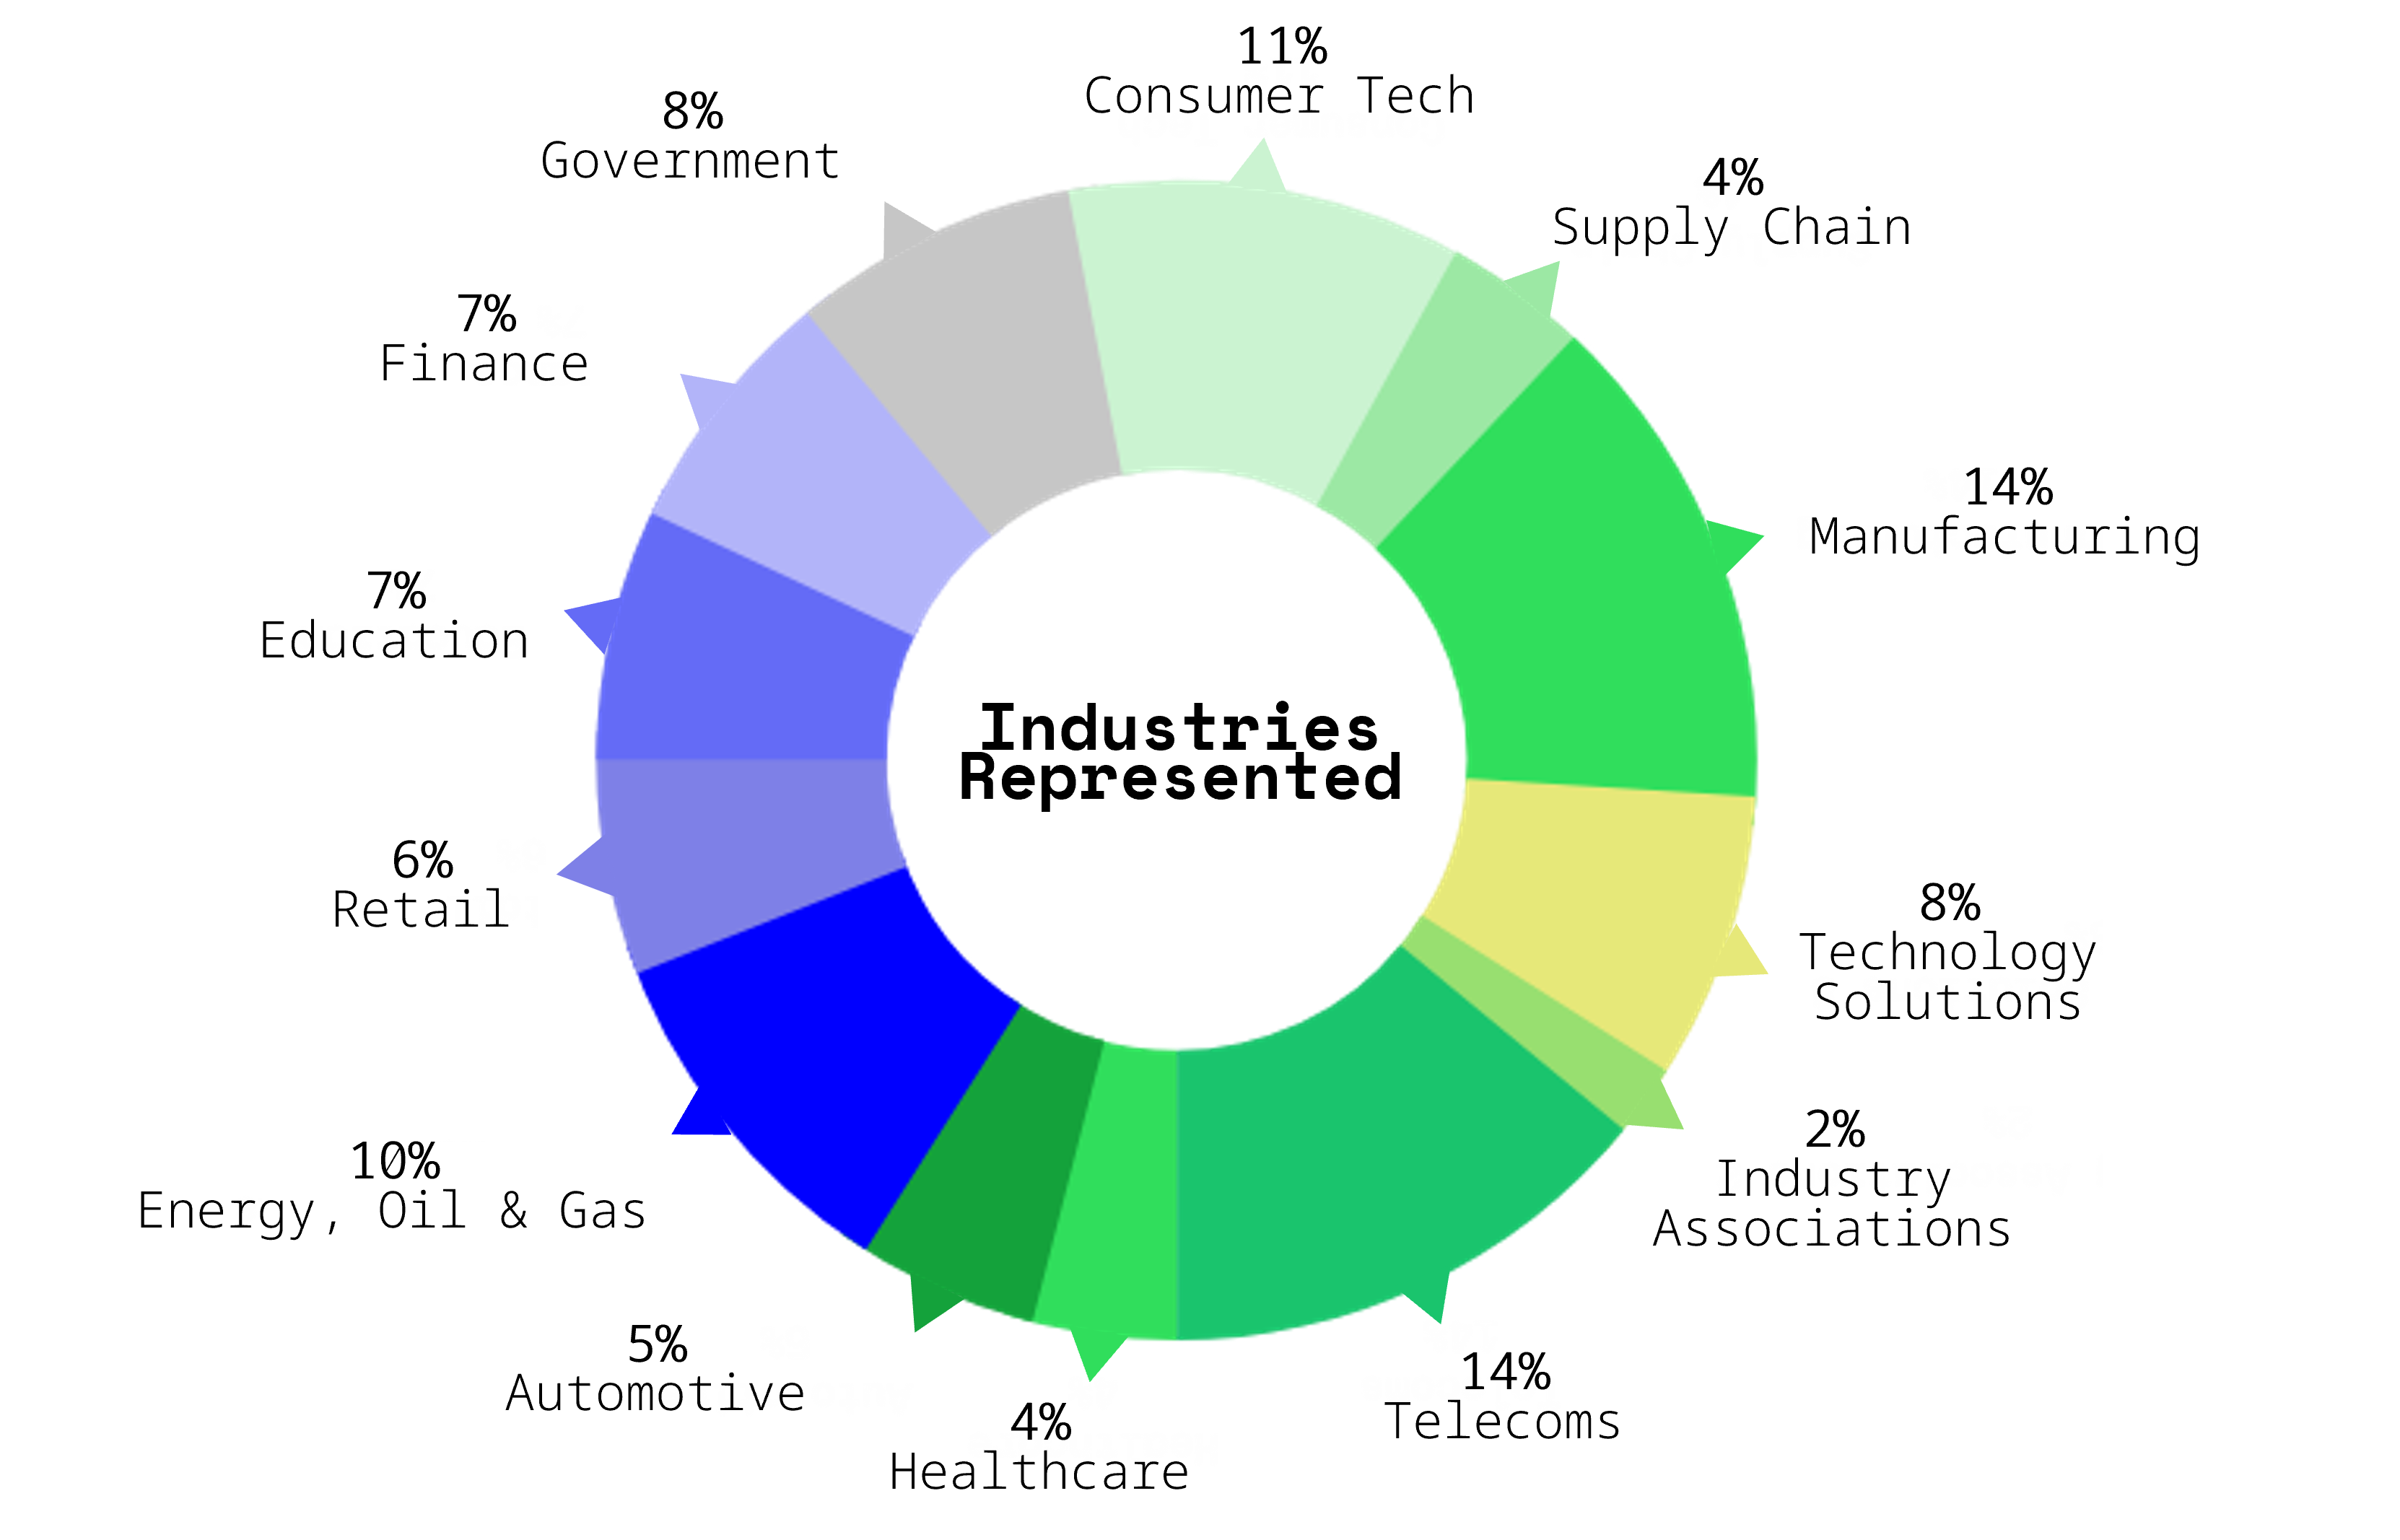 Pie Chart of Industries